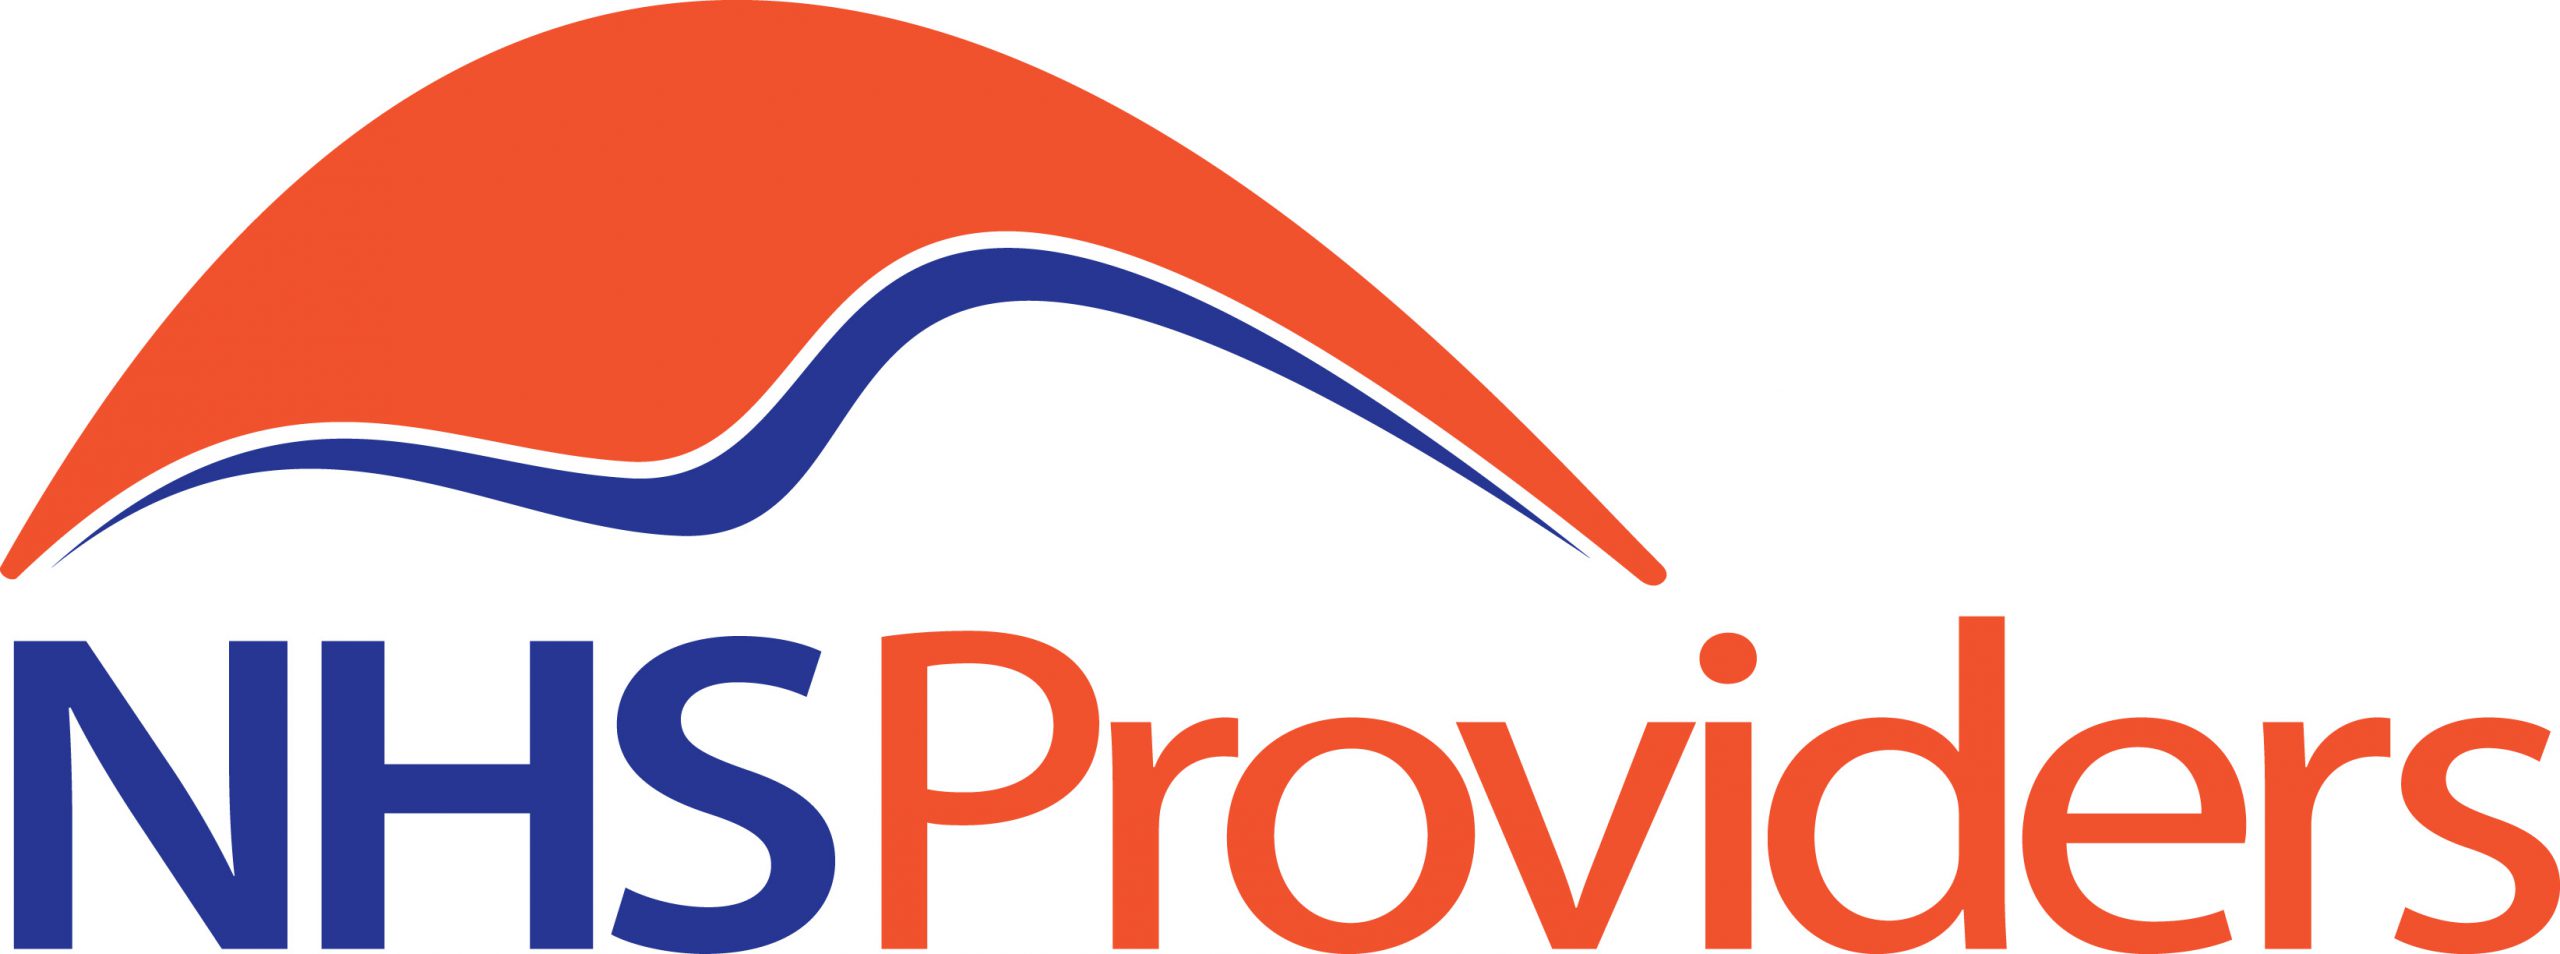 NHS Providers logo